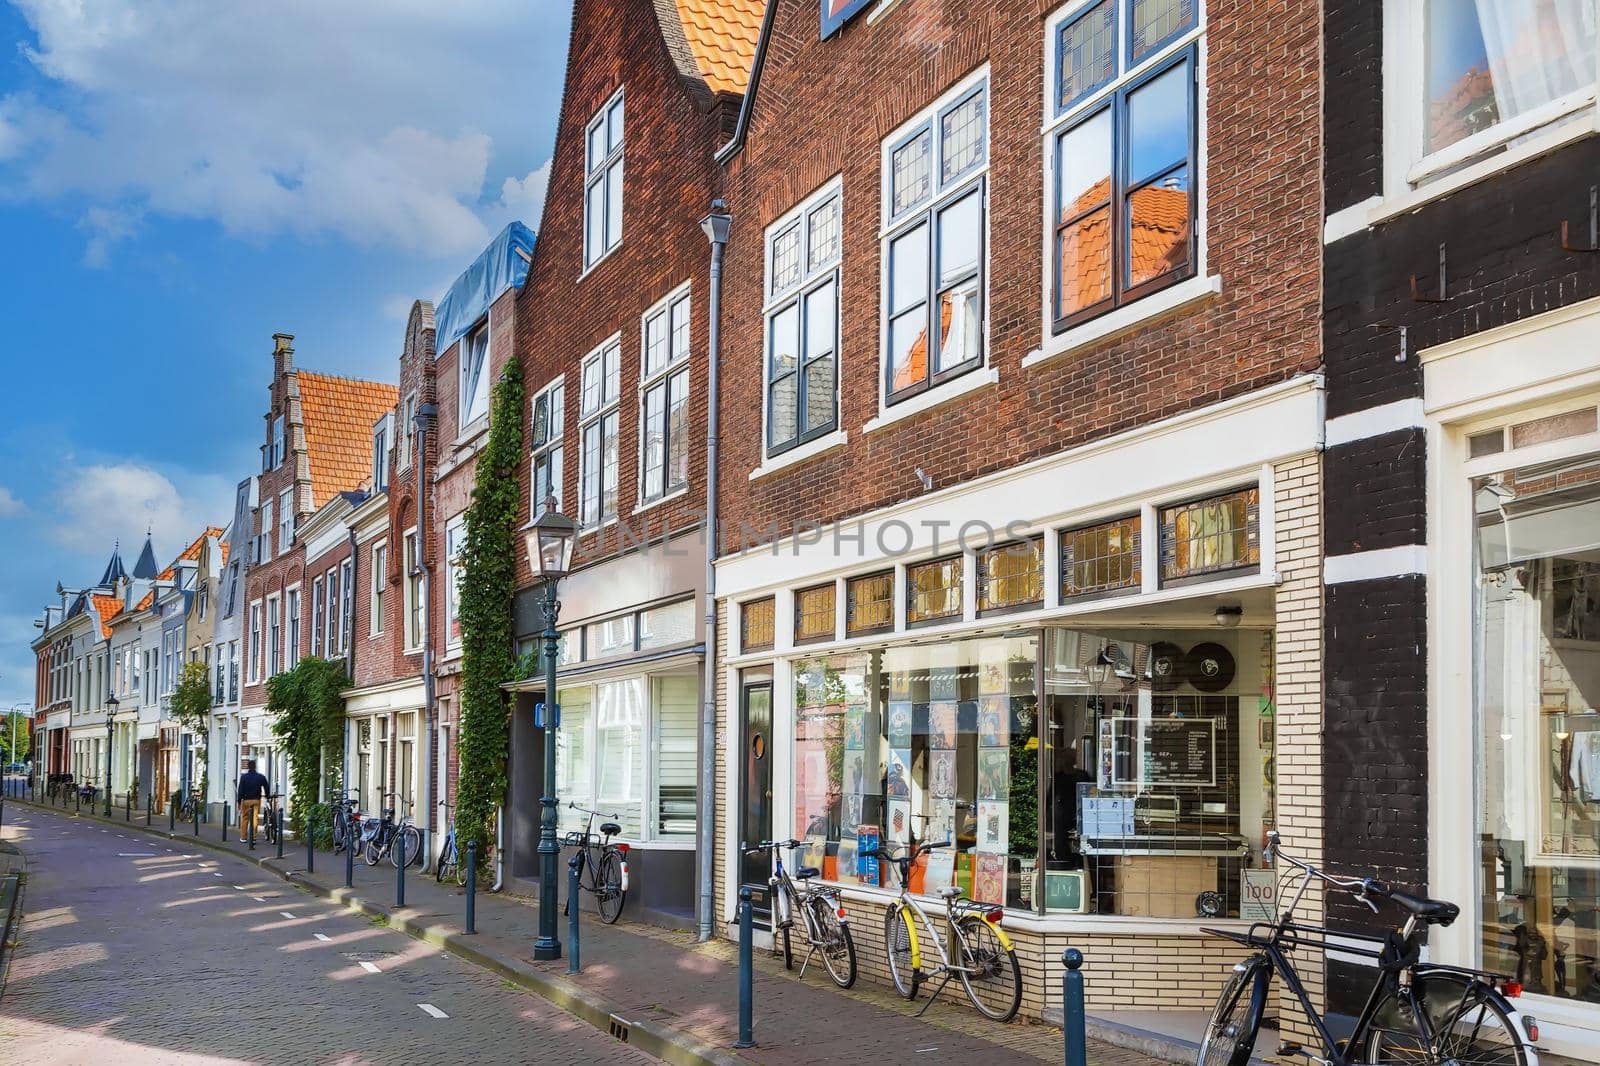 Street in Haarlem, Netherlandsм by borisb17